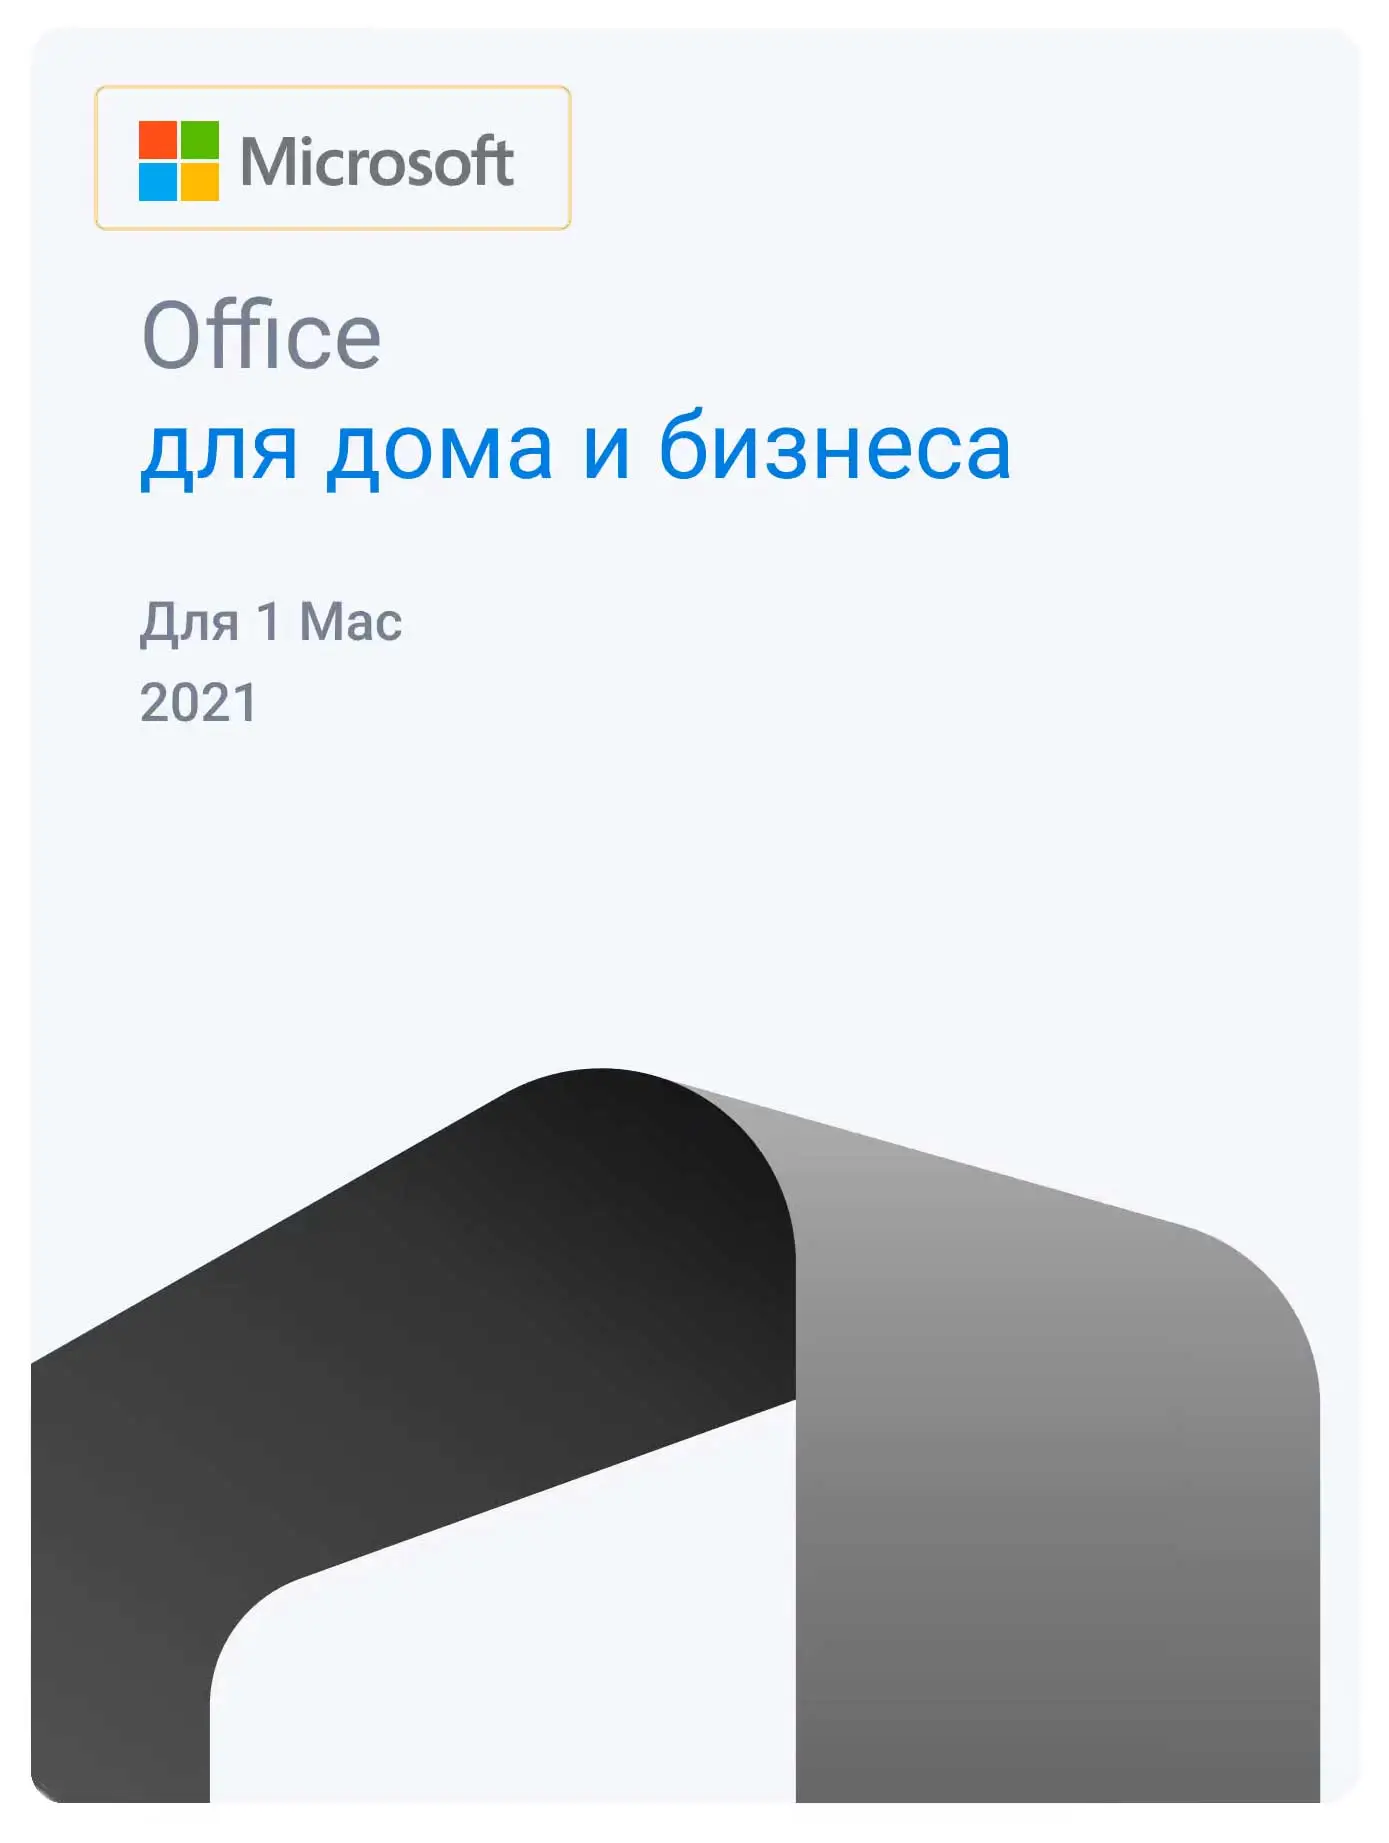 Microsoft Office 2021 для Дома и Бизеса для Mac ( Home and Business )